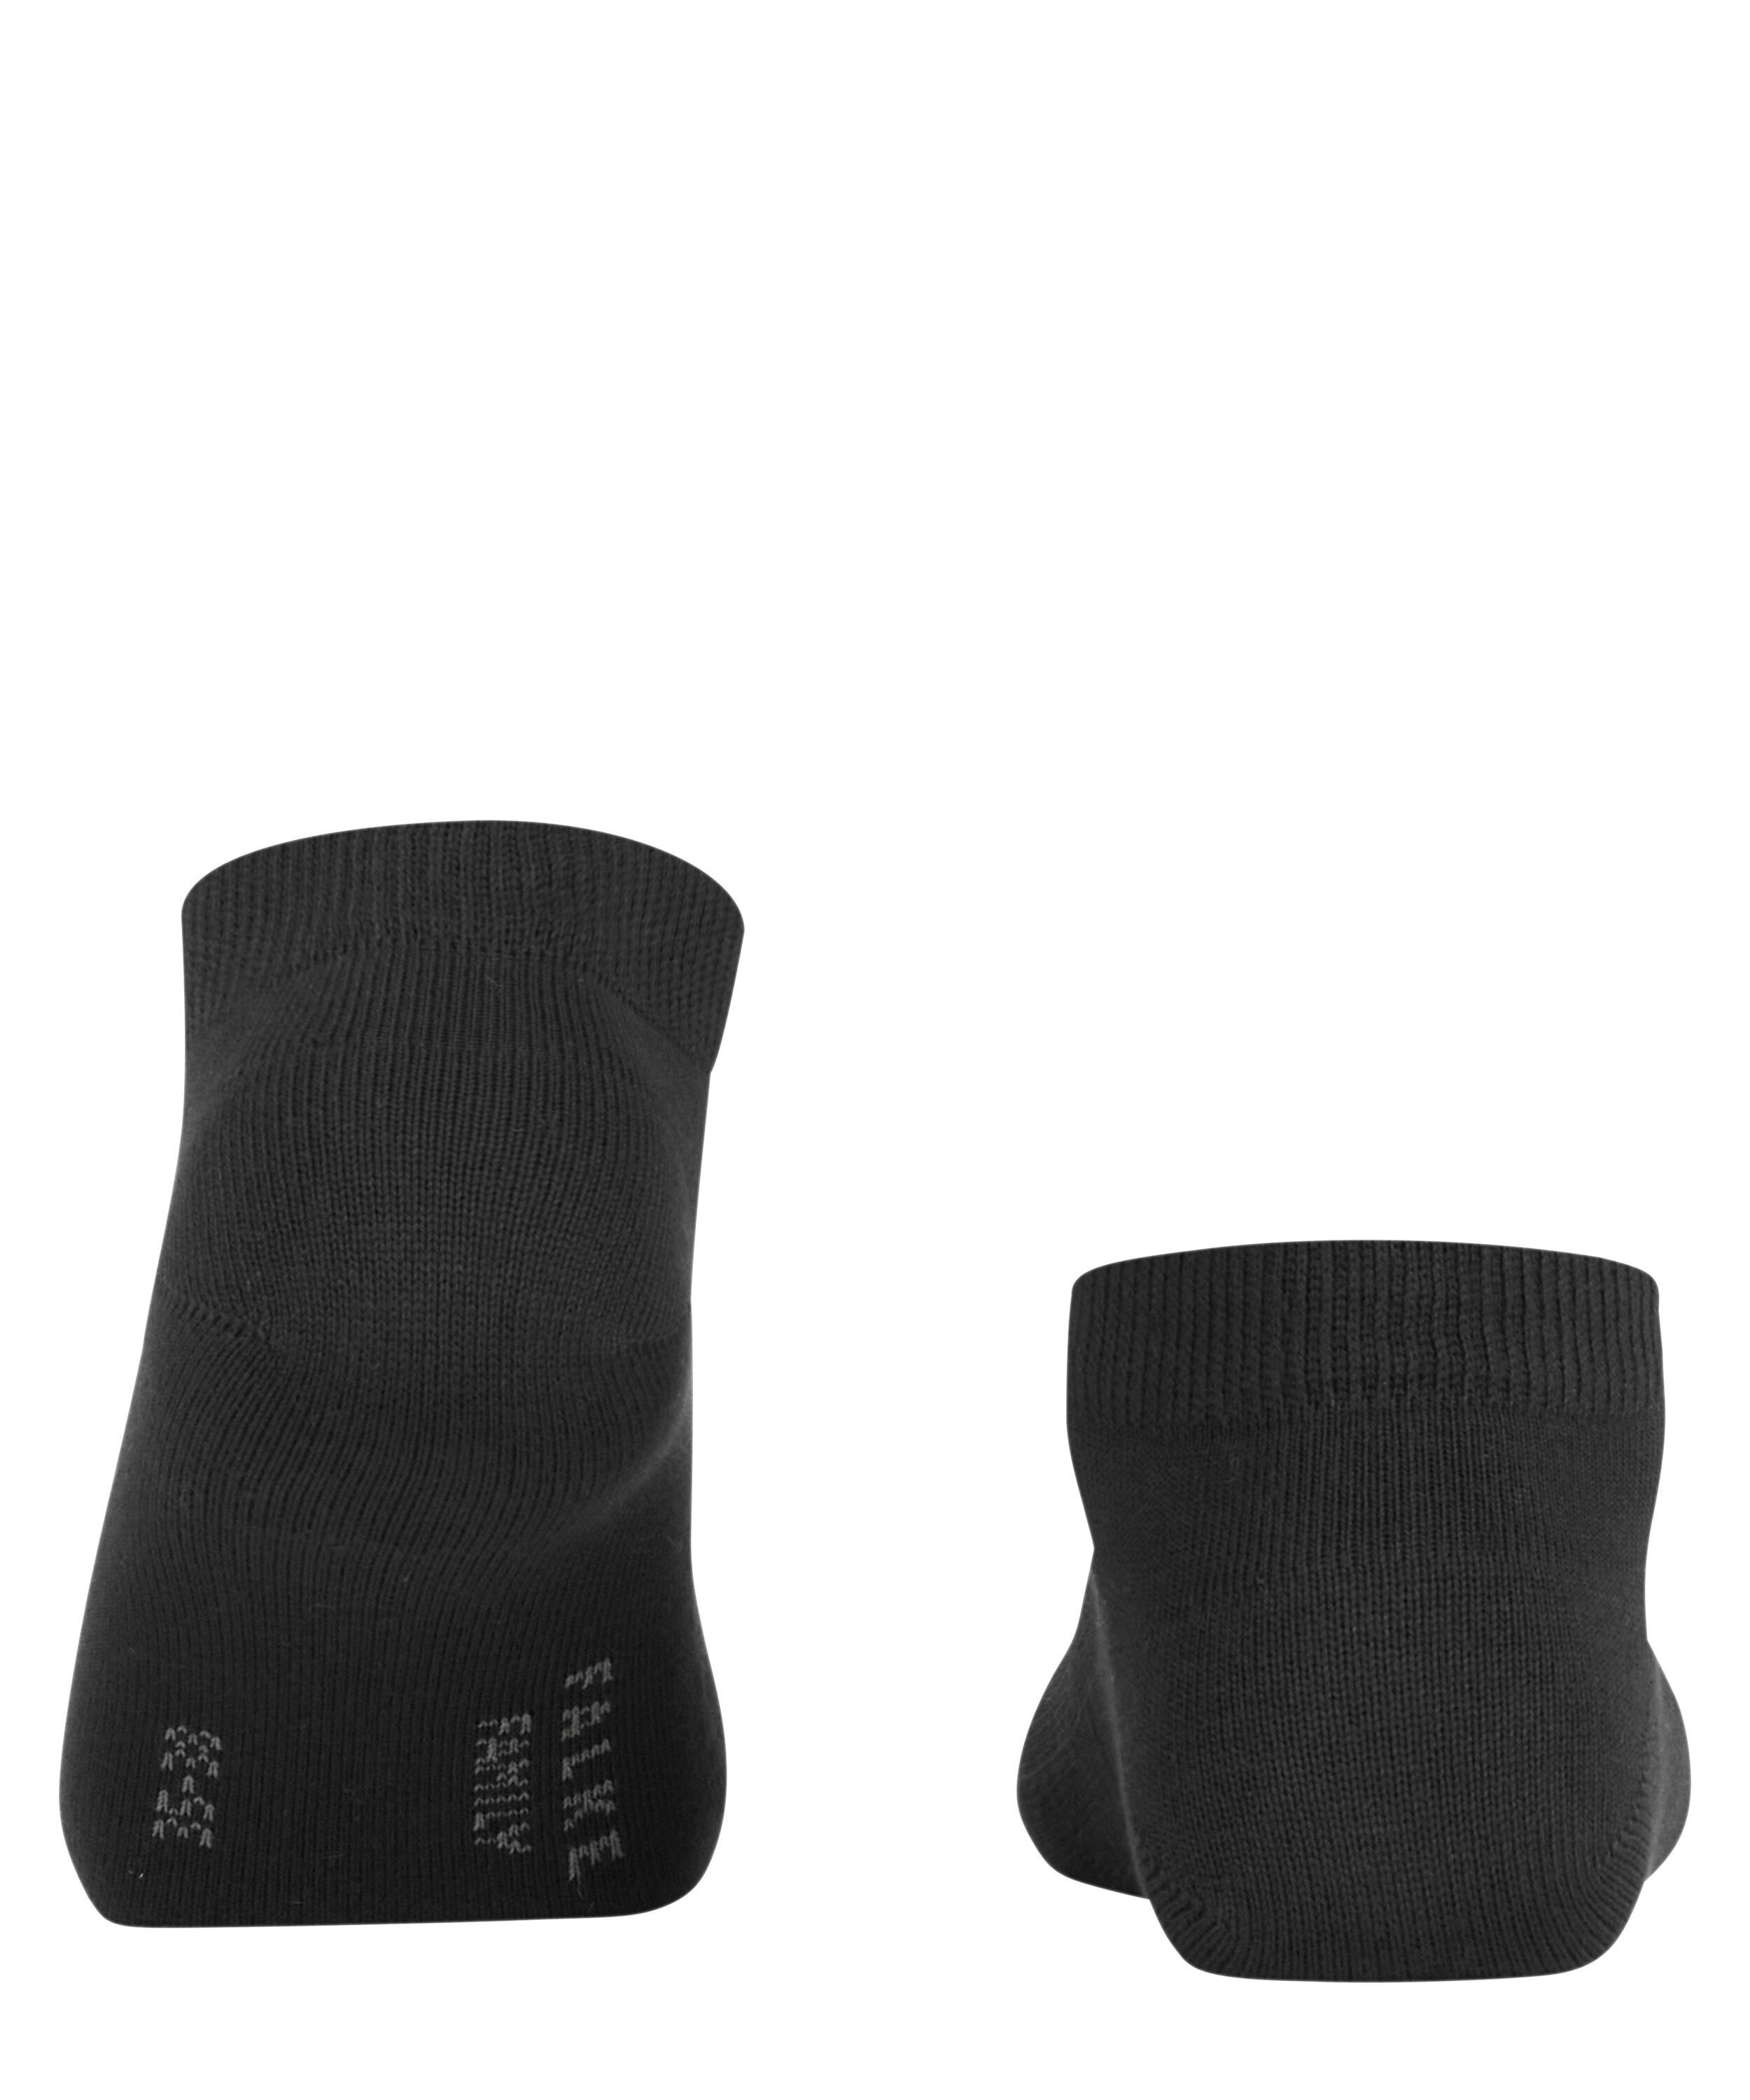 Baumwolle Family FALKE black nachhaltiger (3009) Sneakersocken (1-Paar) mit